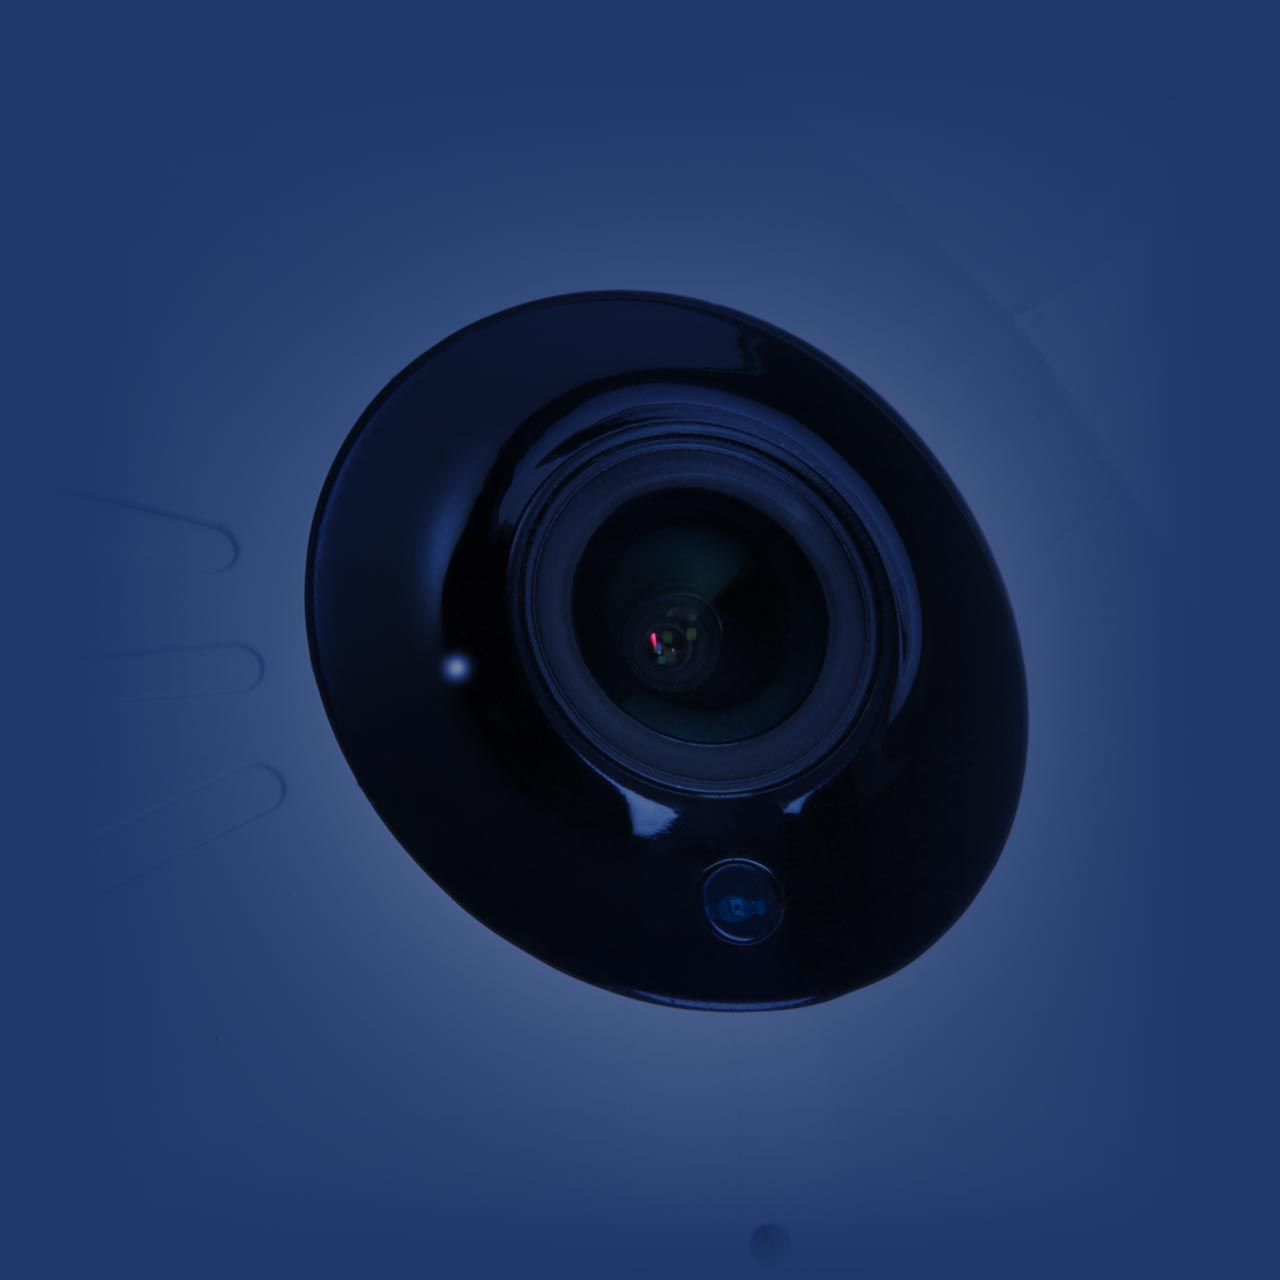 Caméra-souris intelligente Catit PIXI avec vision nocturne